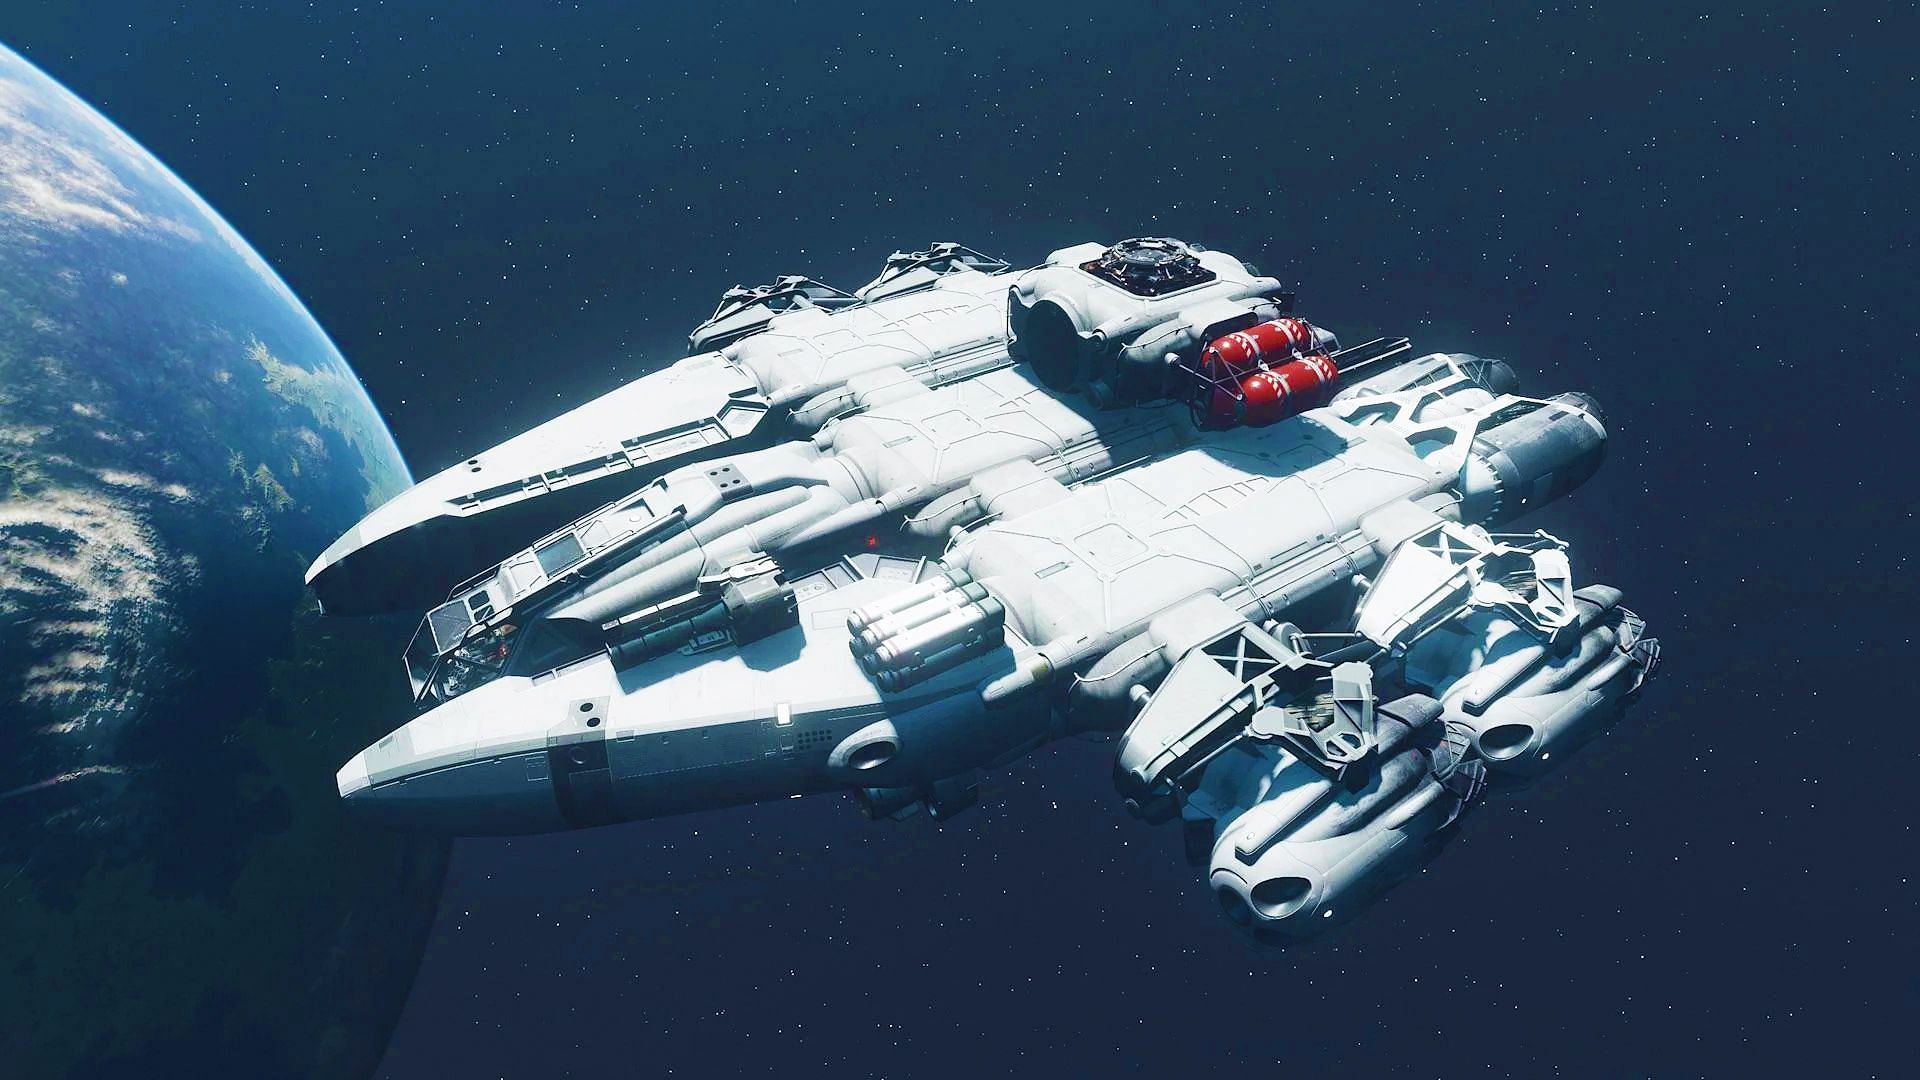 A guide on how to build Starfield Star Wars Millennium Falcon in Starfield (Image via abdelkarim19/Reddit)